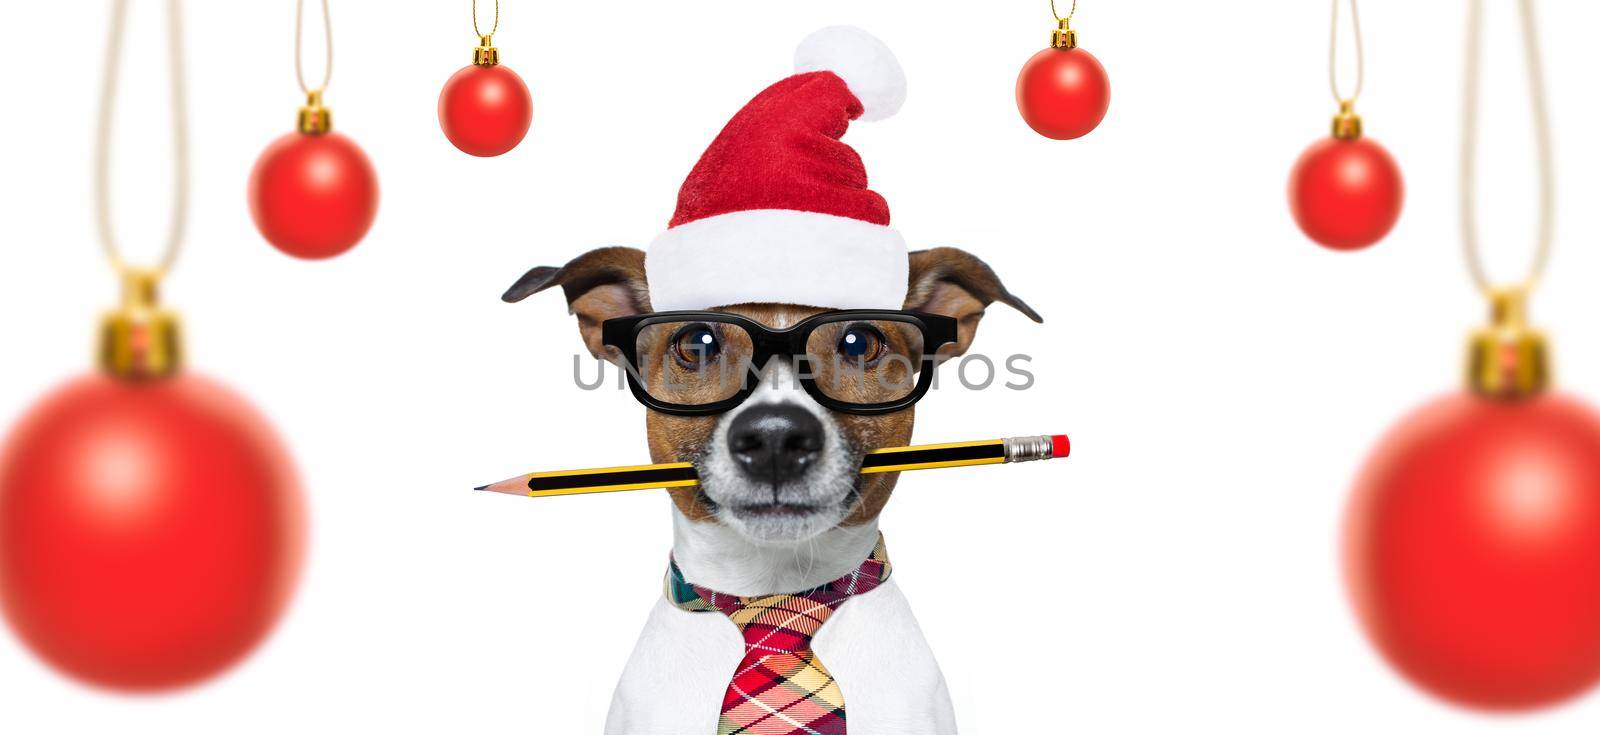 dog on christmas holidays by Brosch